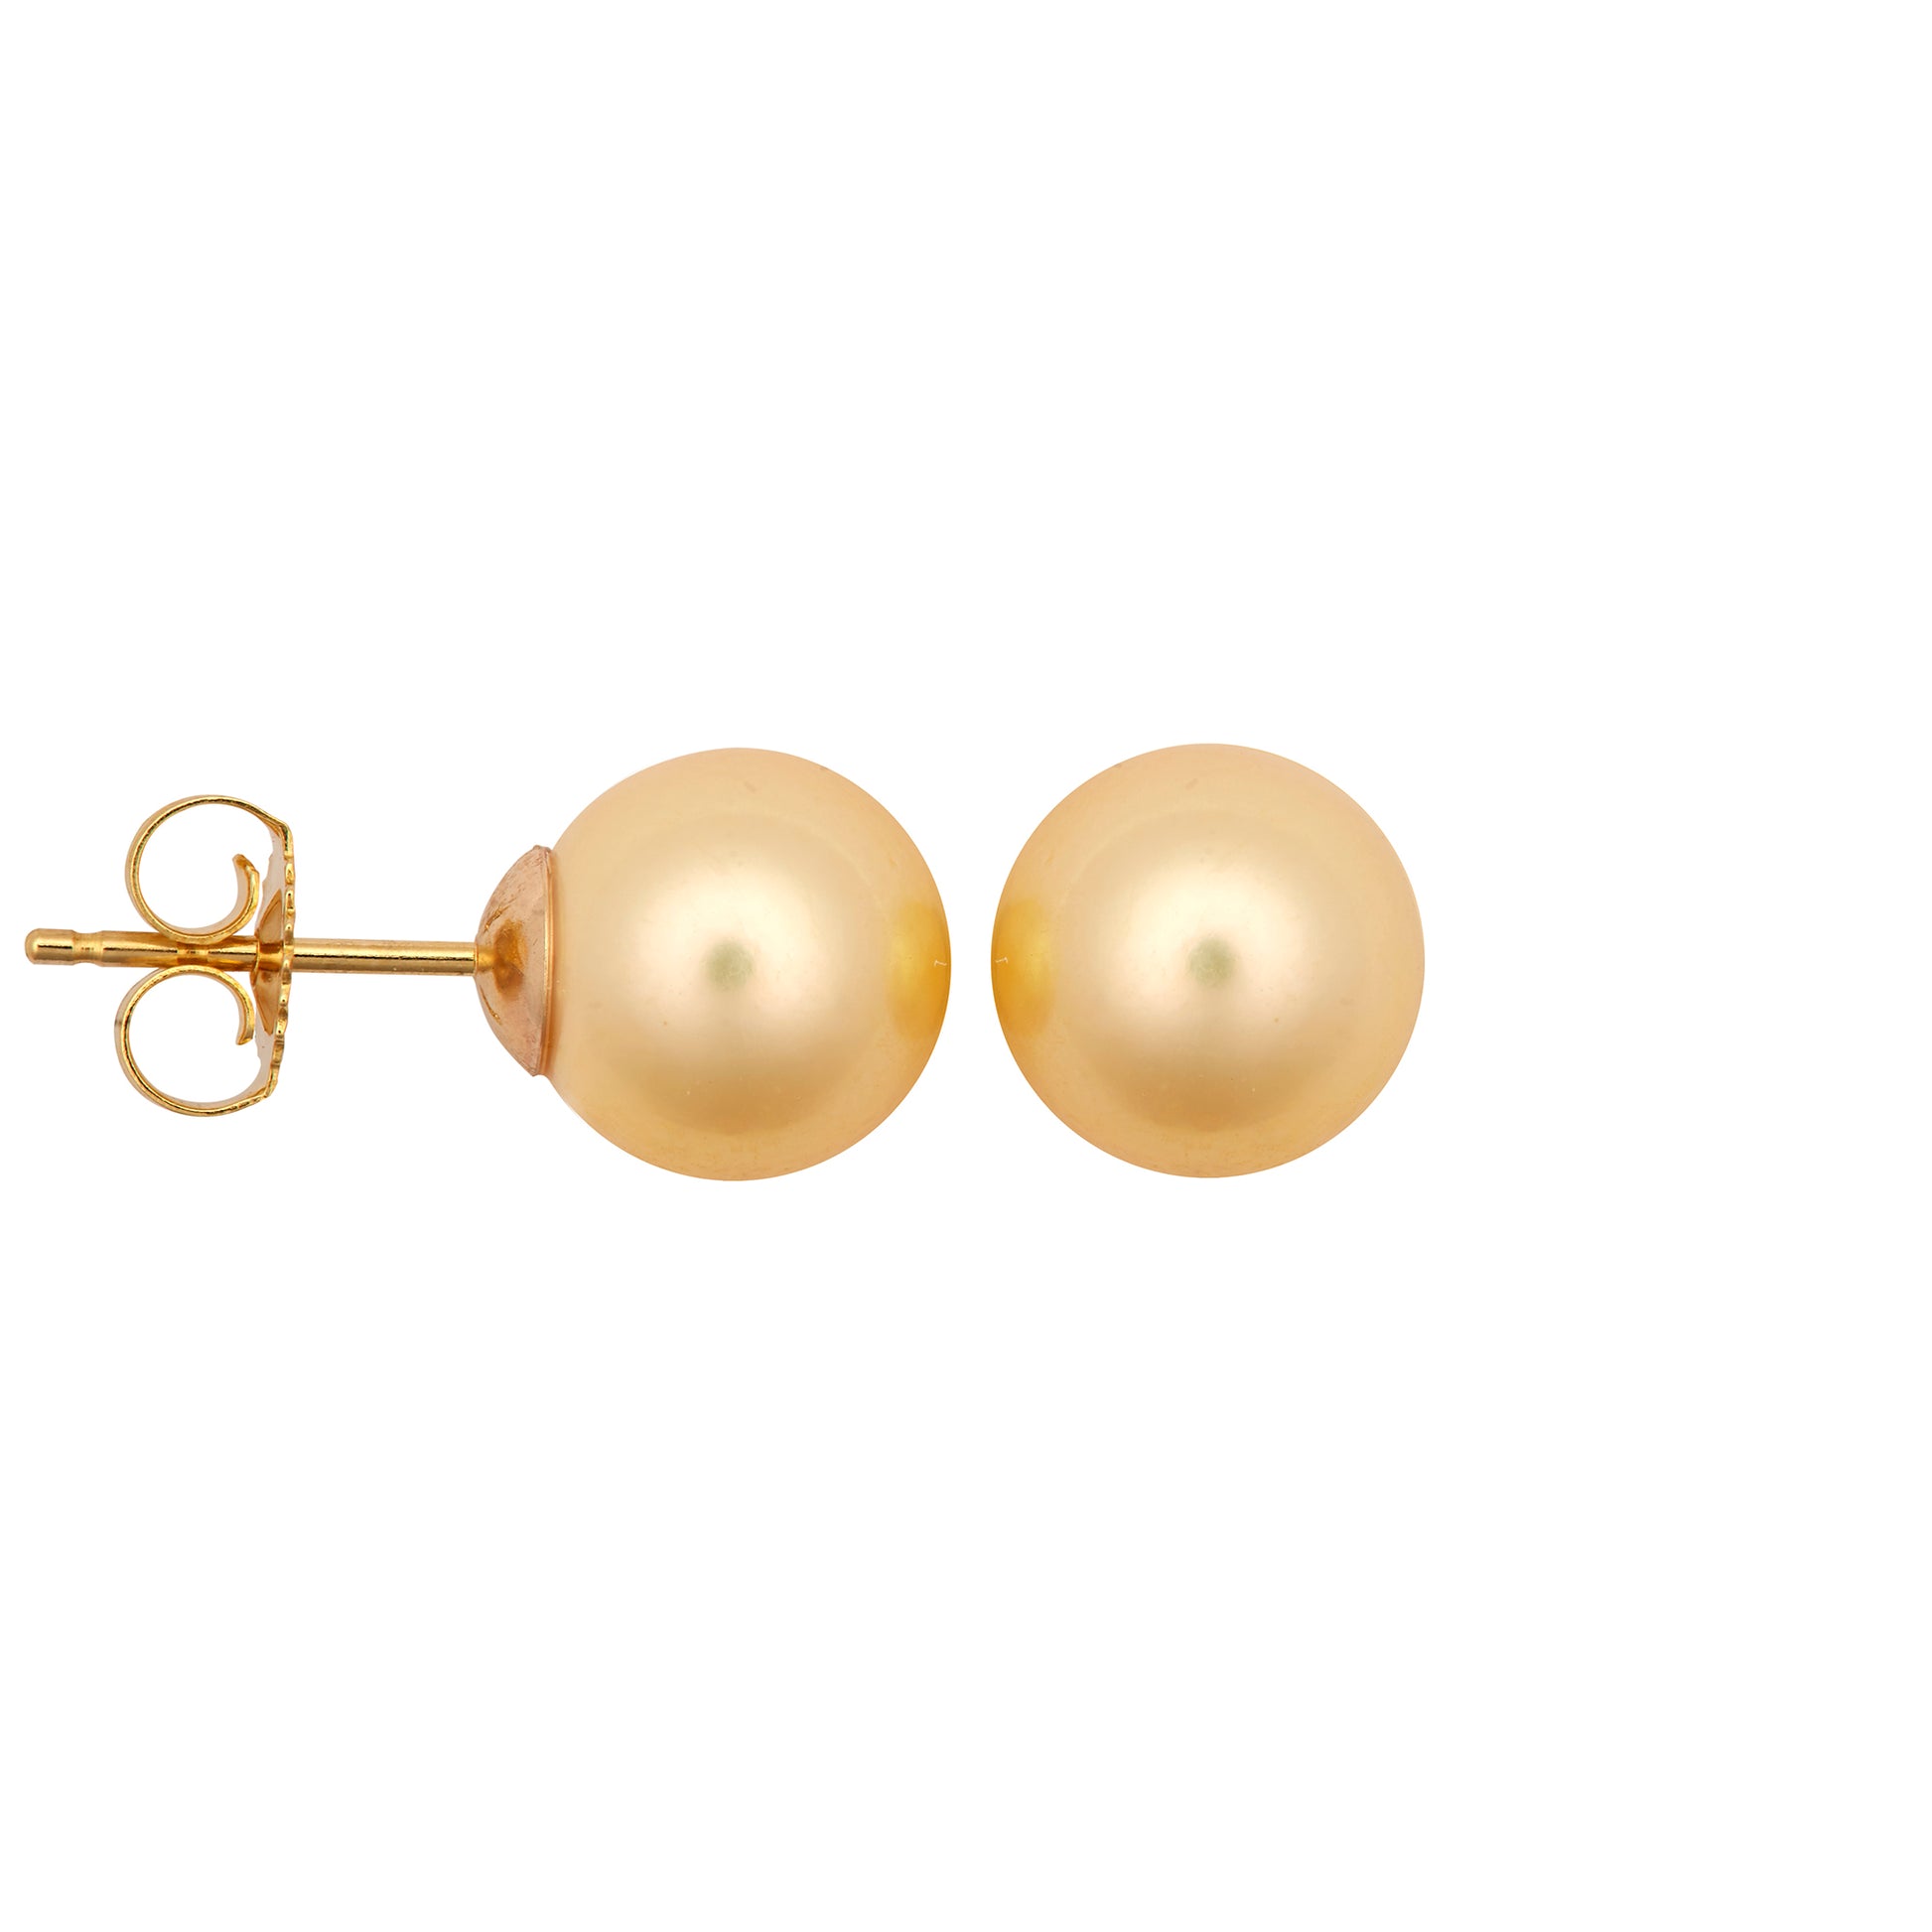 9ct Gold  Creamy Akoya Cultured Pearl Full Moon Stud Earrings 8mm - JES364